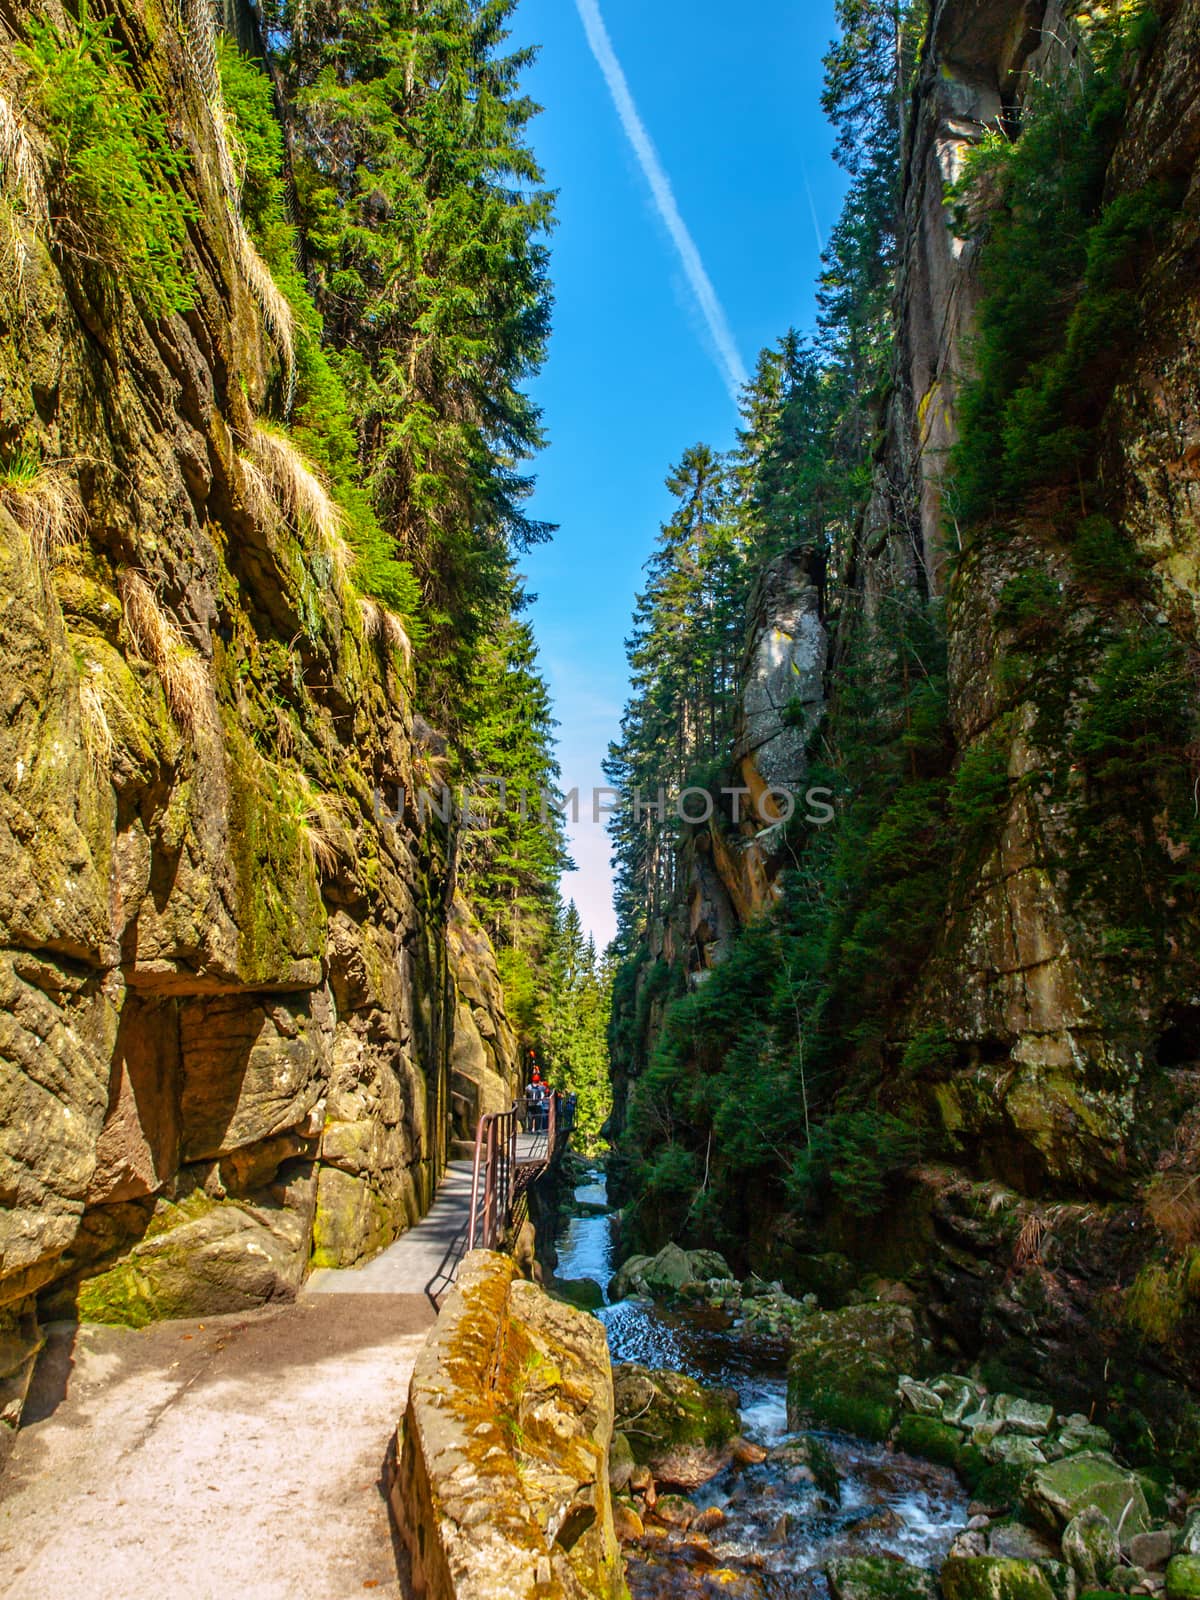 Narrow gorge under Kamienczyk waterfall in Giant Mountains, Poland.